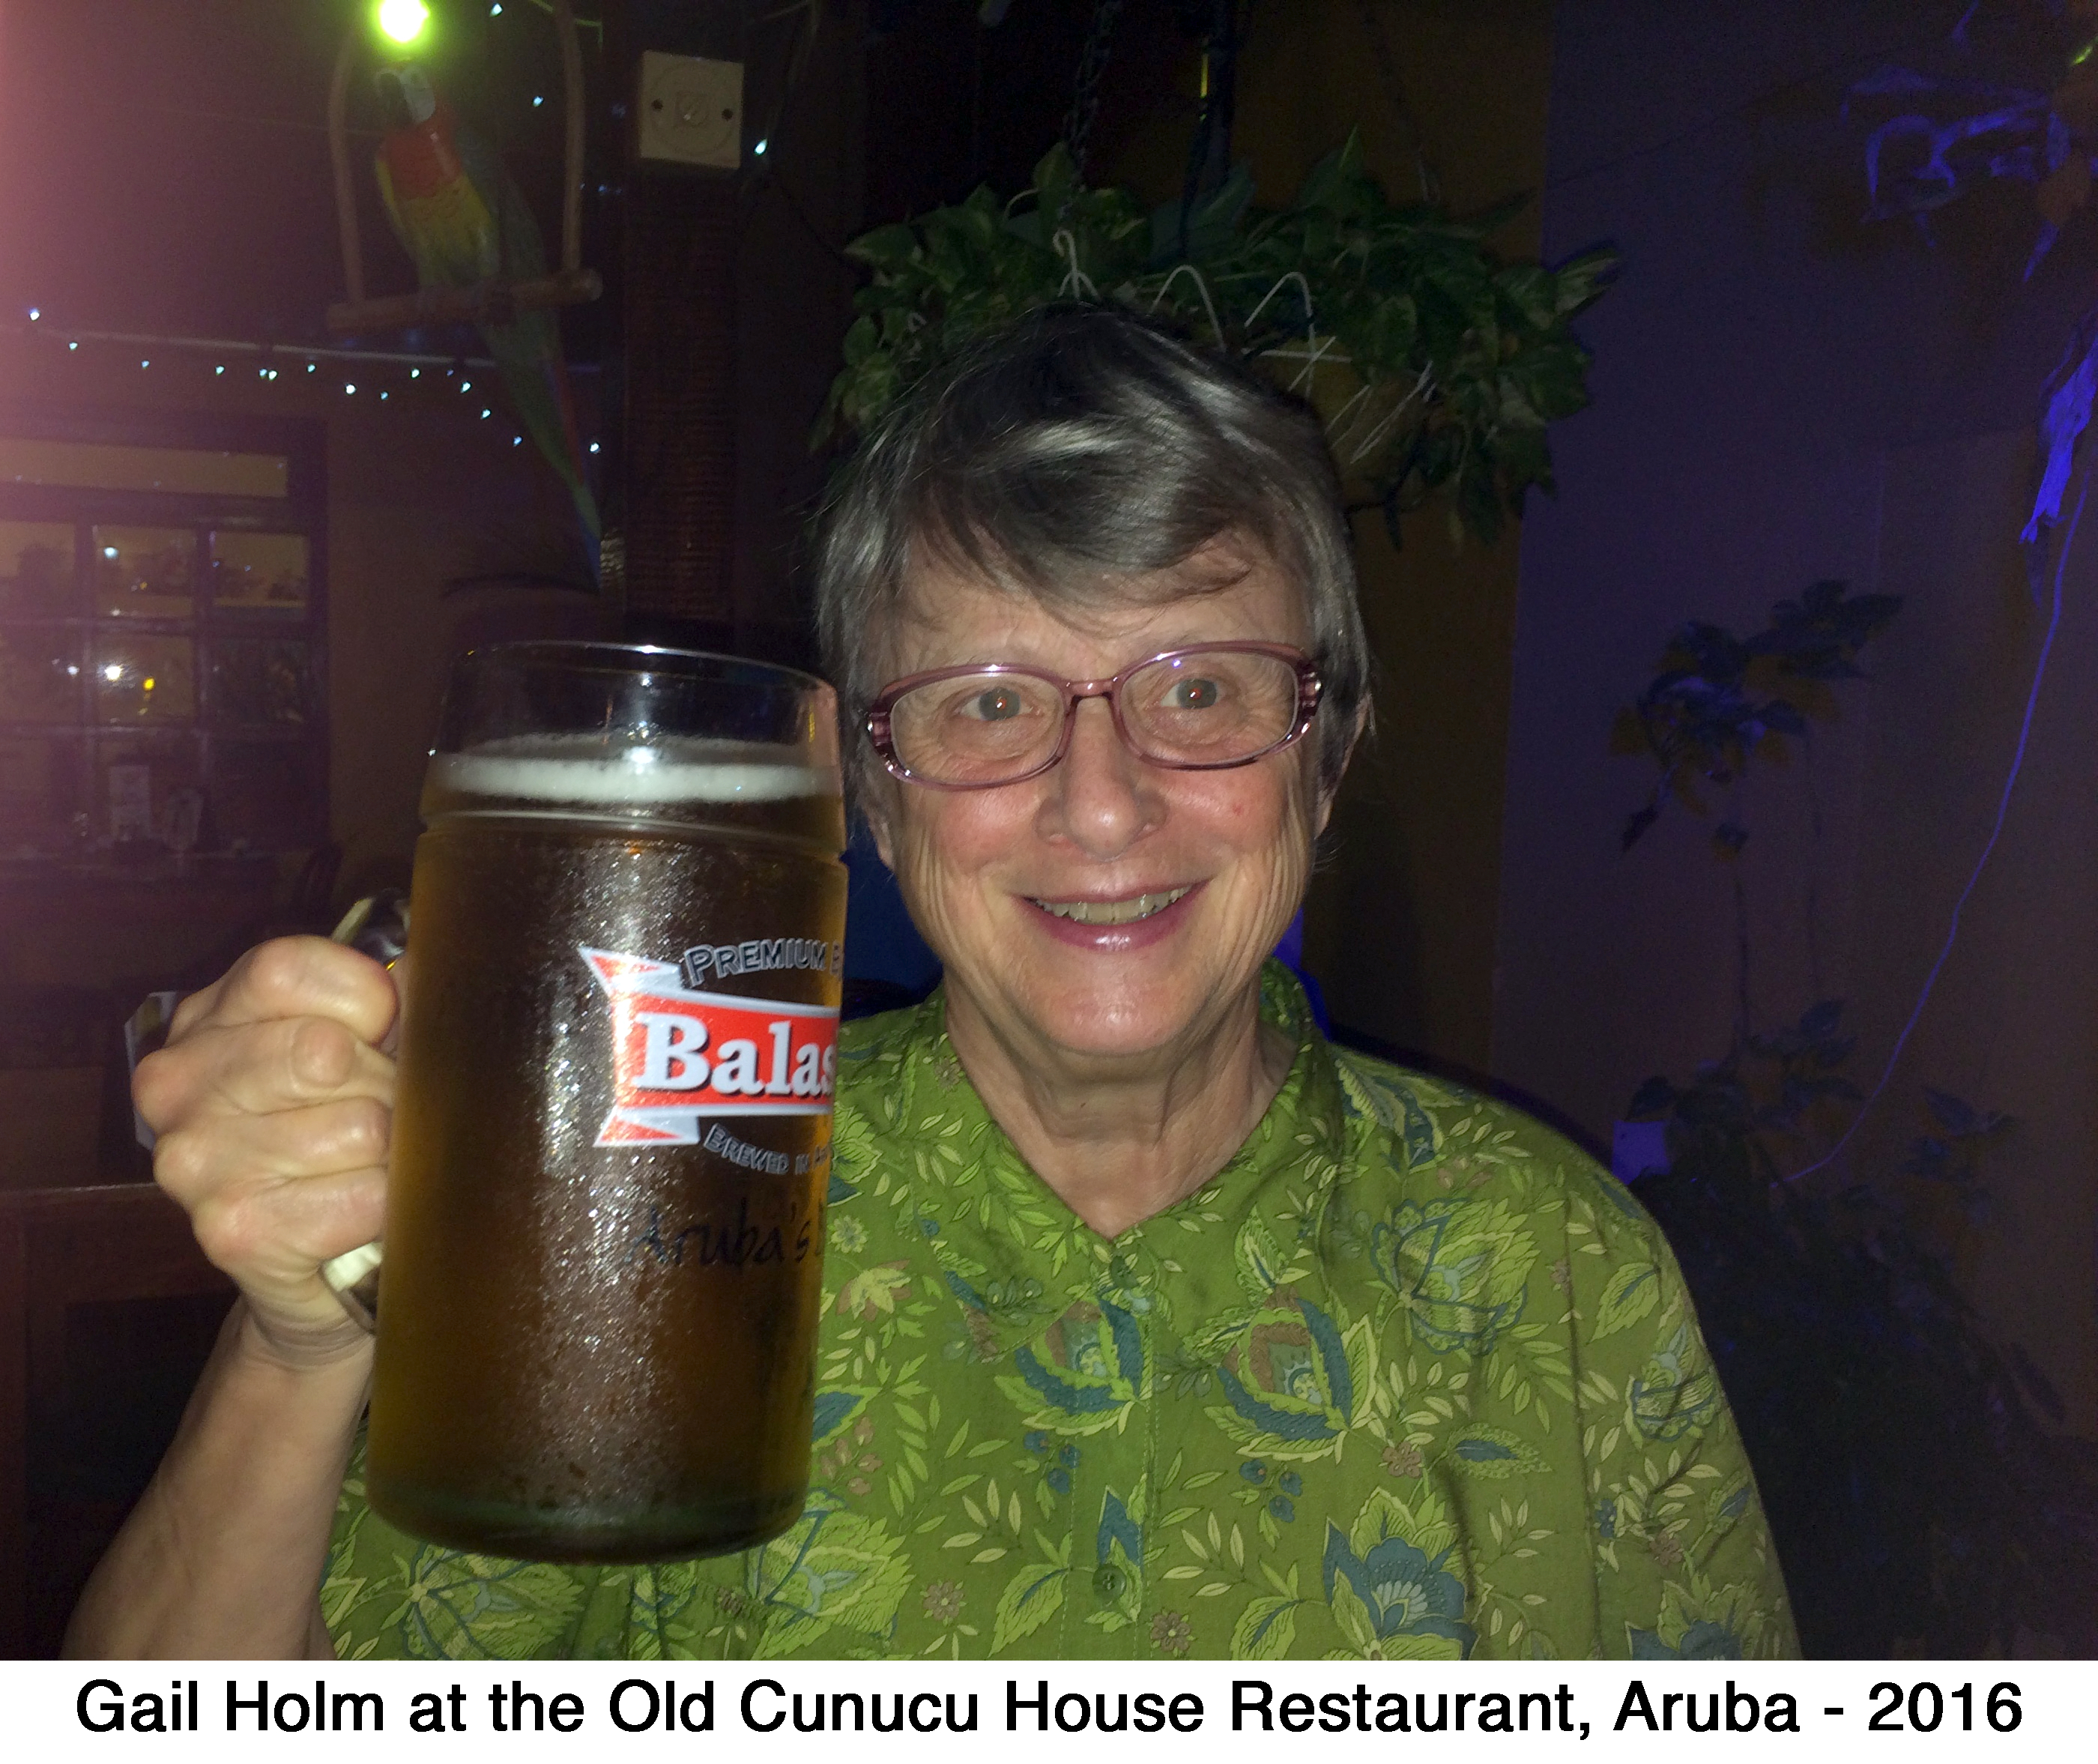 Gail Holm smiling and holding a huge mug of beer